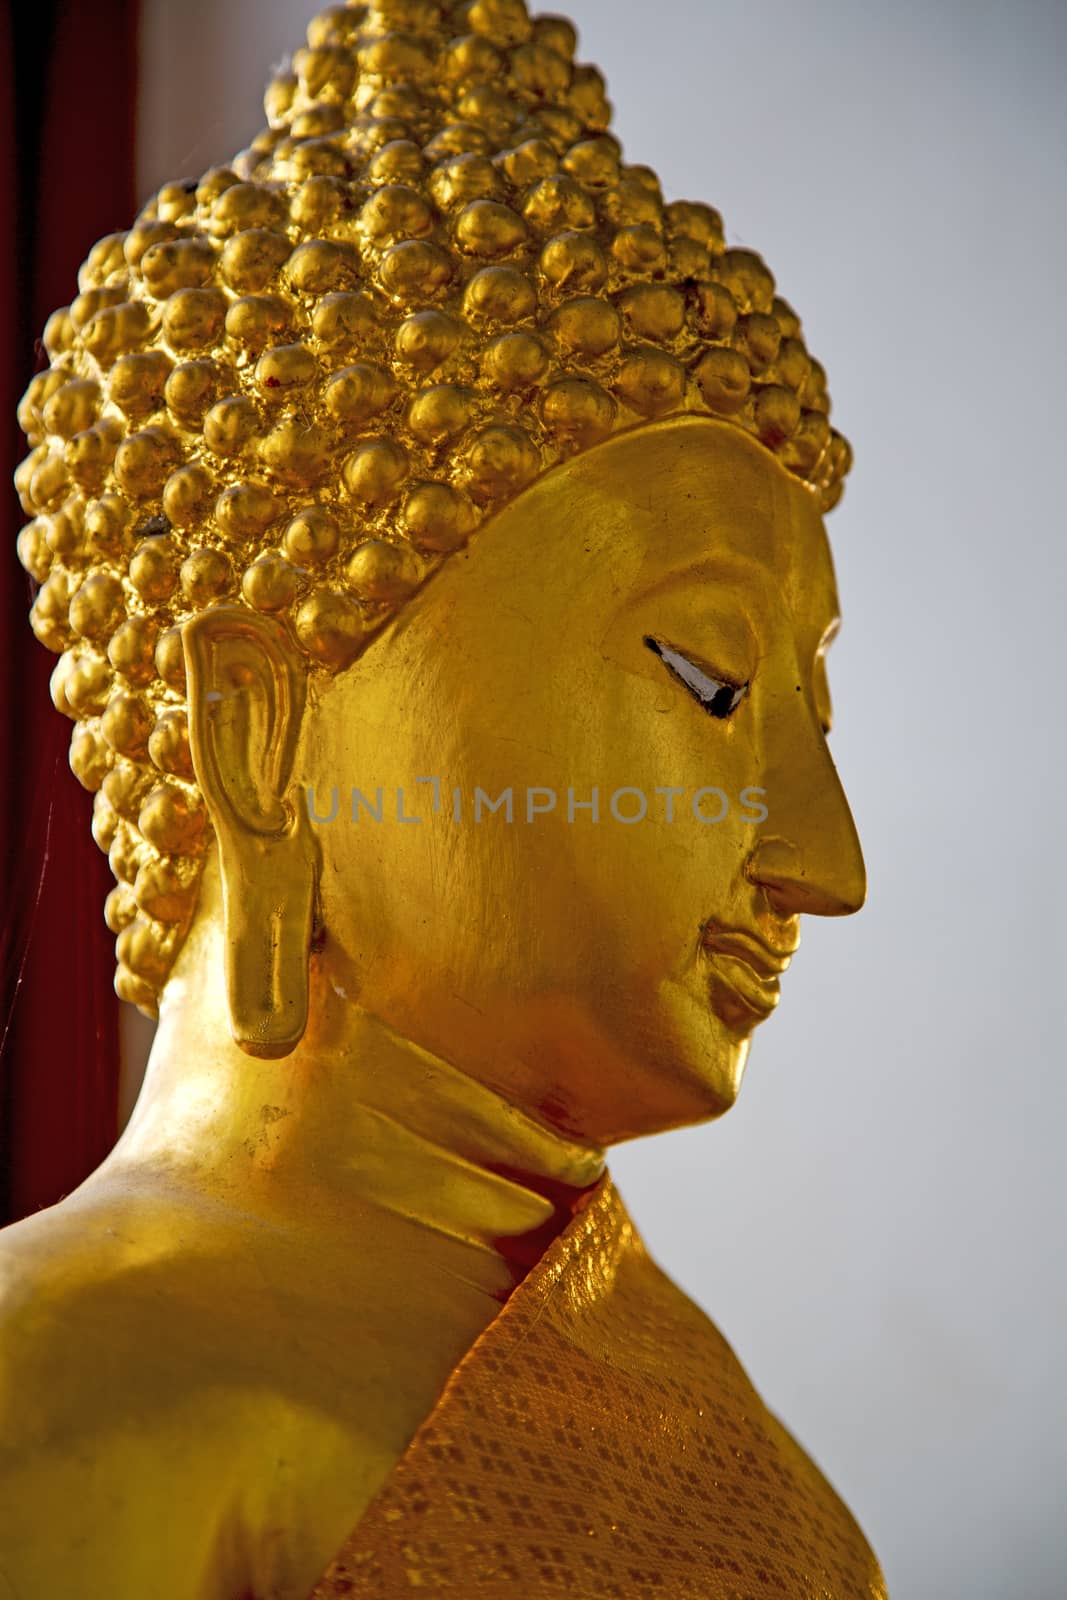 siddharta   in the temple bangkok      wat  palaces    by lkpro